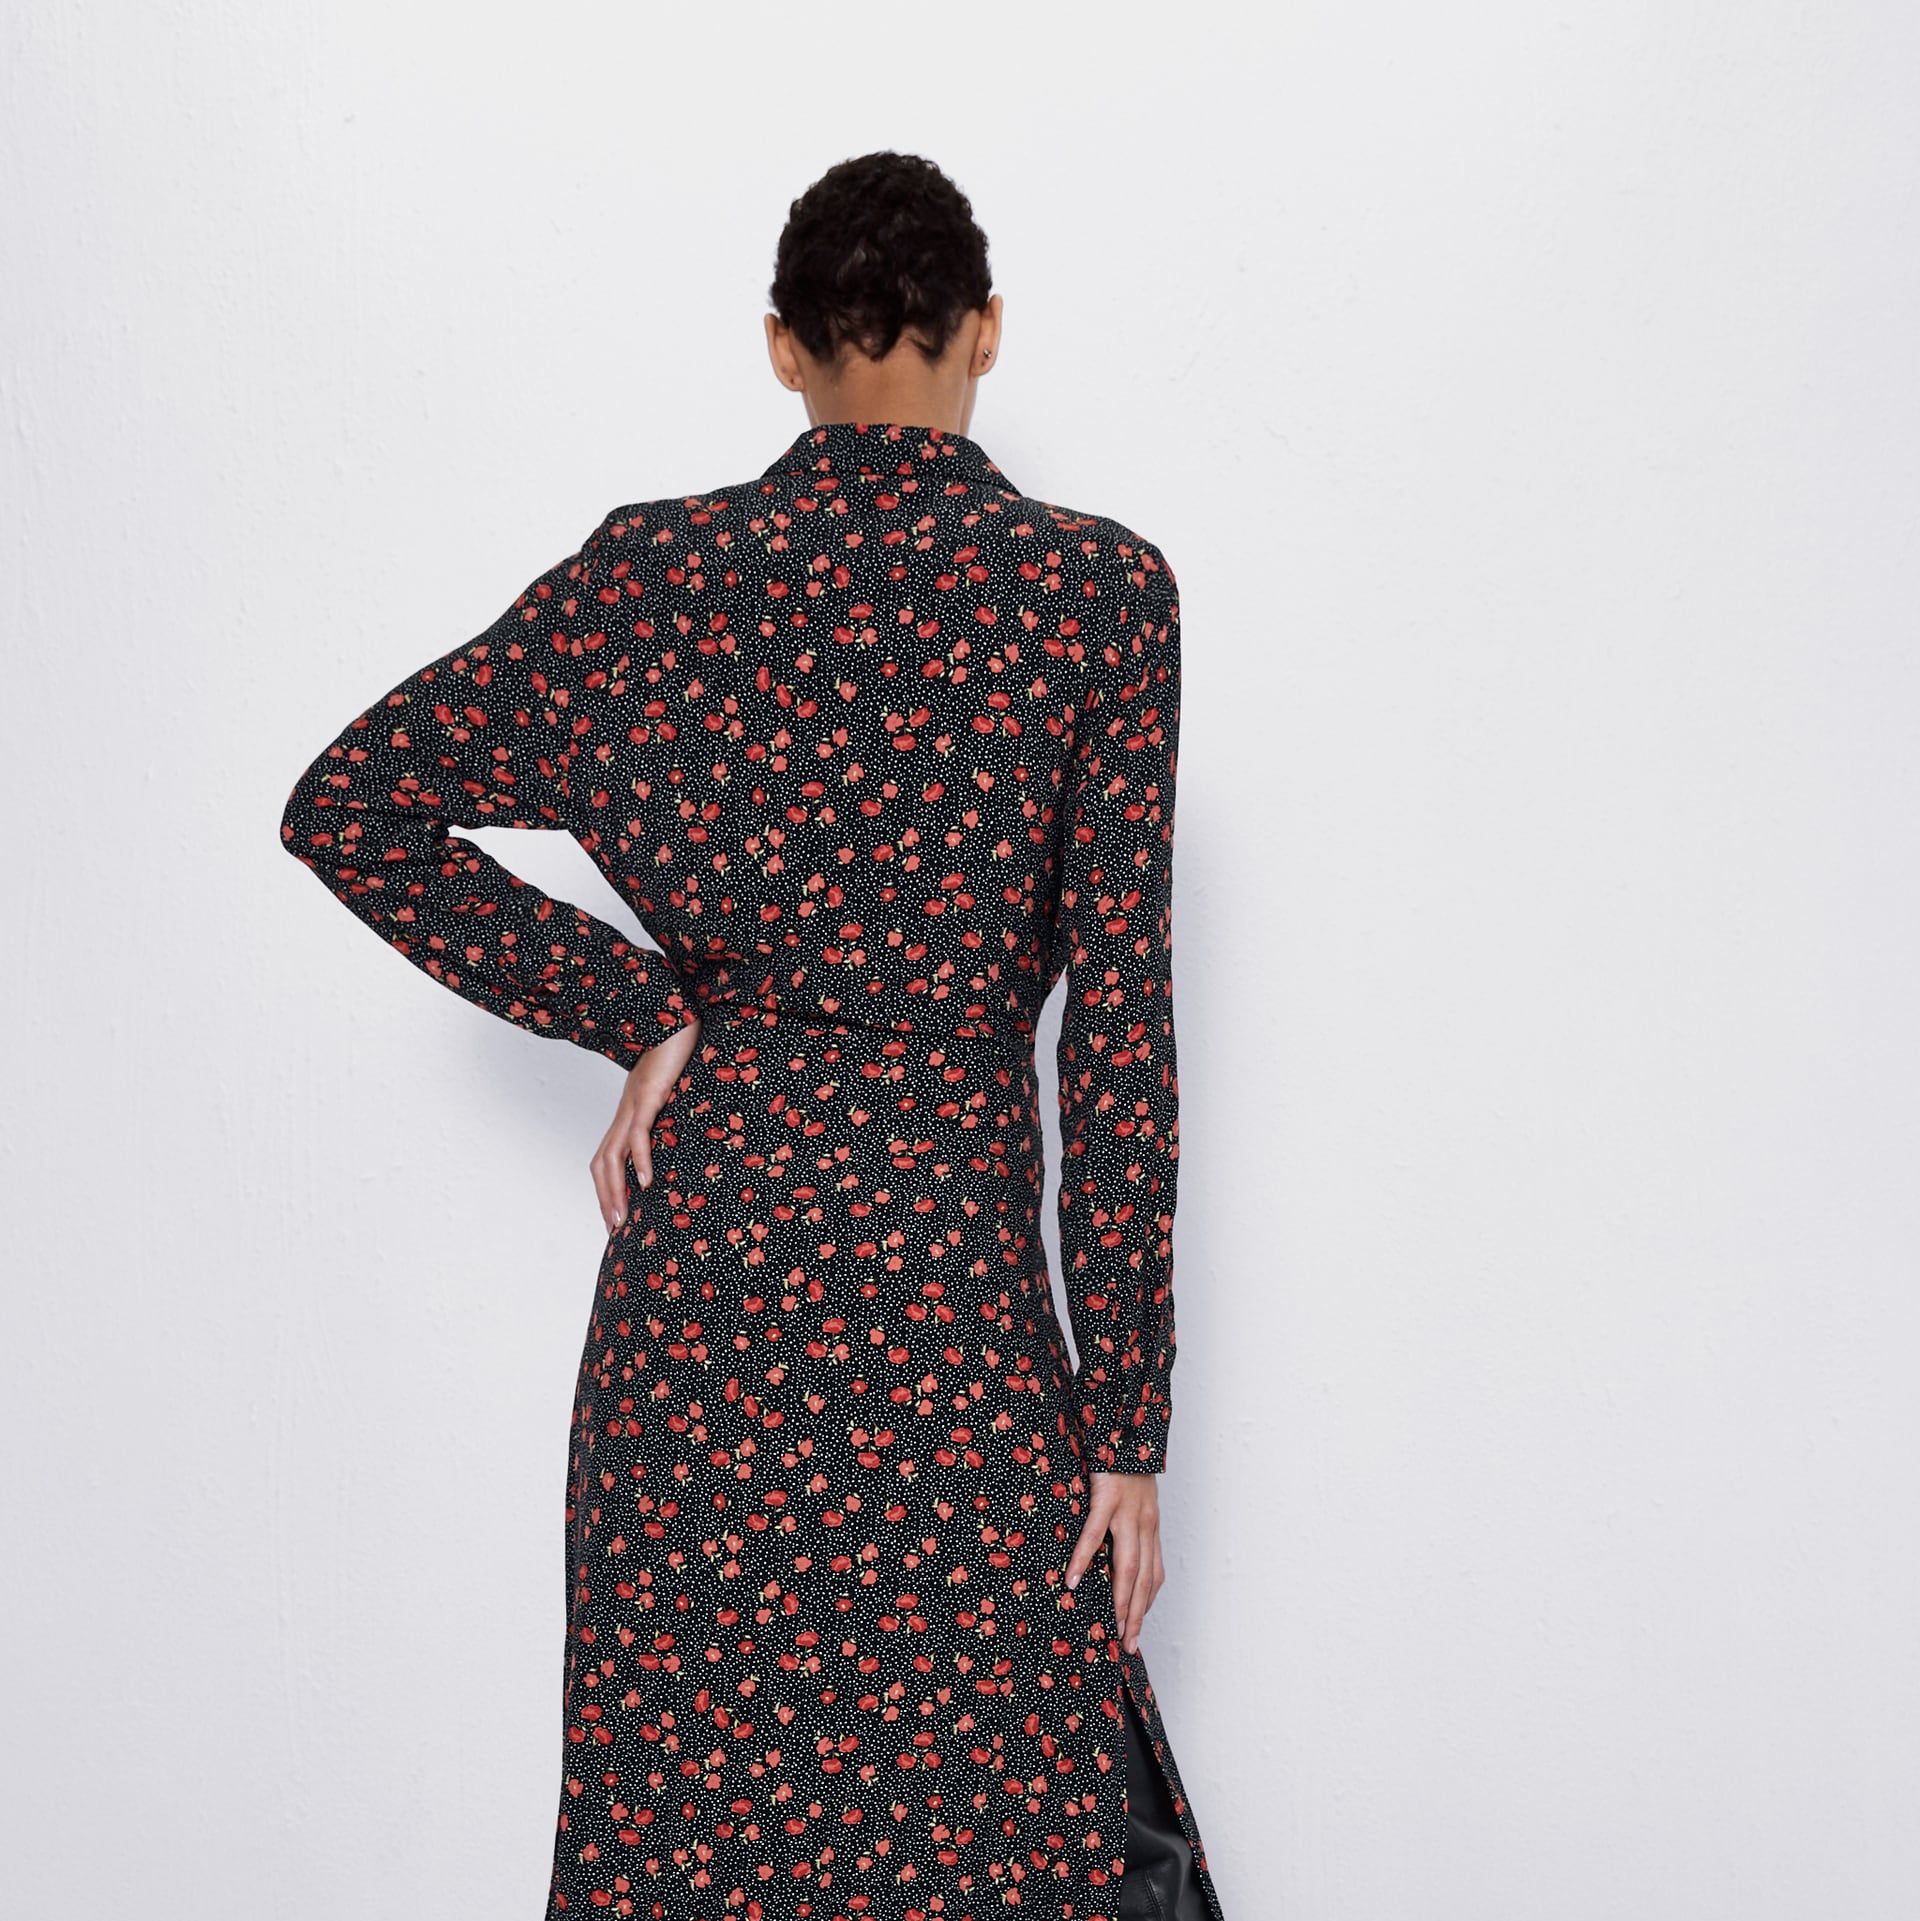 Zara su famoso diseño de vestido camisero-Vestido Zara